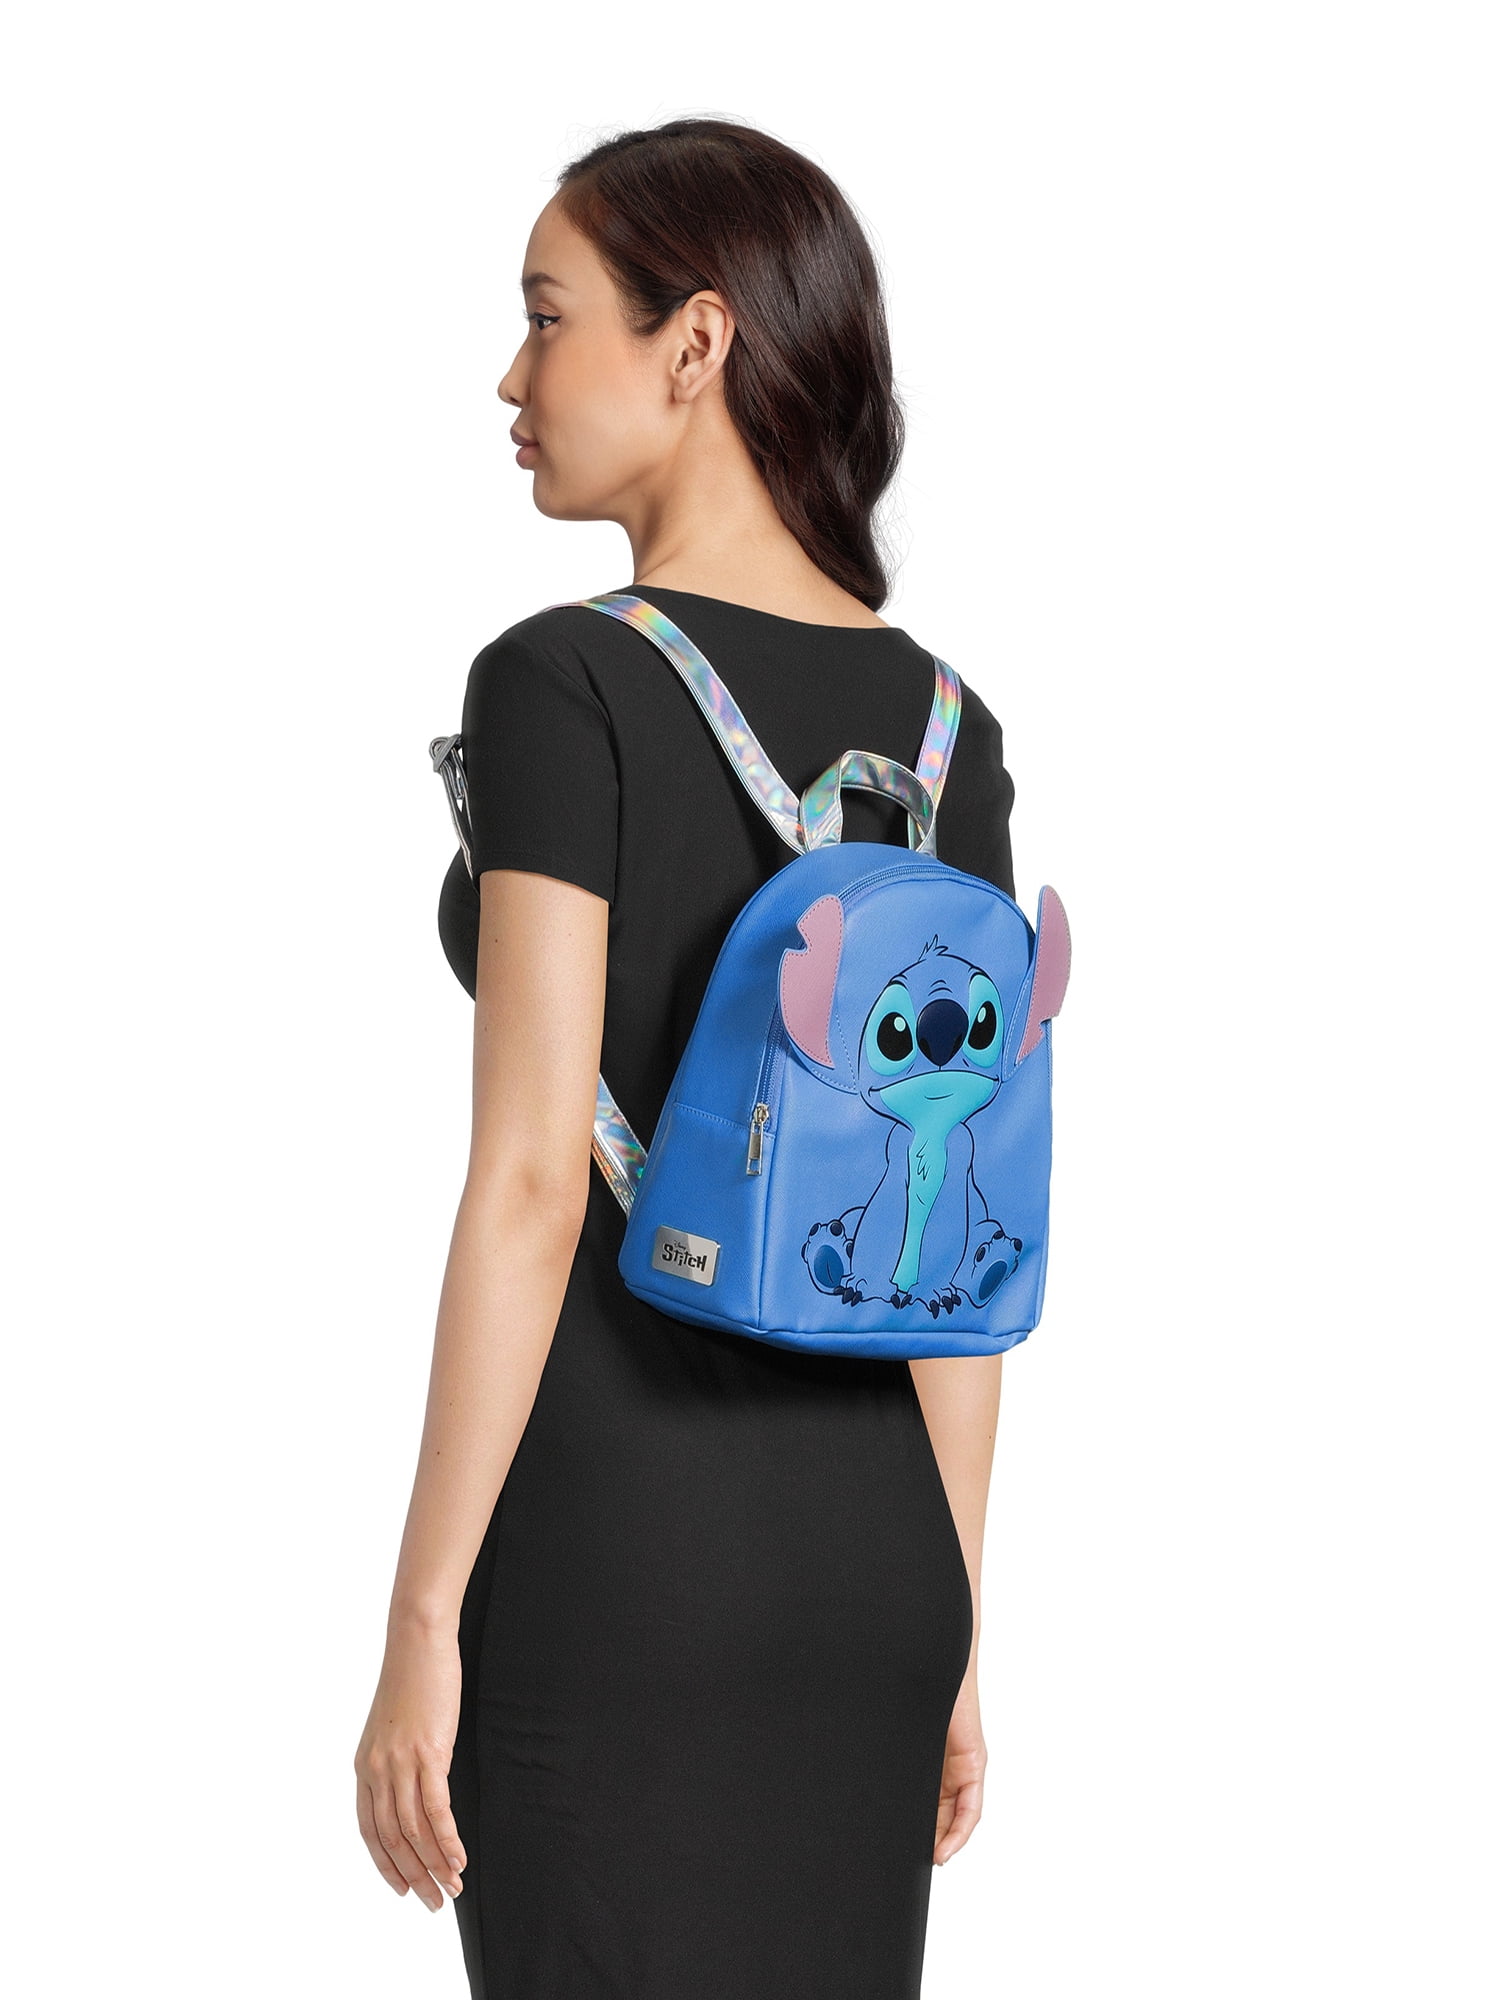 FunnyBeans Mini Backpack Girls Cute Small Backpack Purse for Women Teens  Kids School Travel Shoulder Purse Bag (Flower Butterfly) - Walmart.com